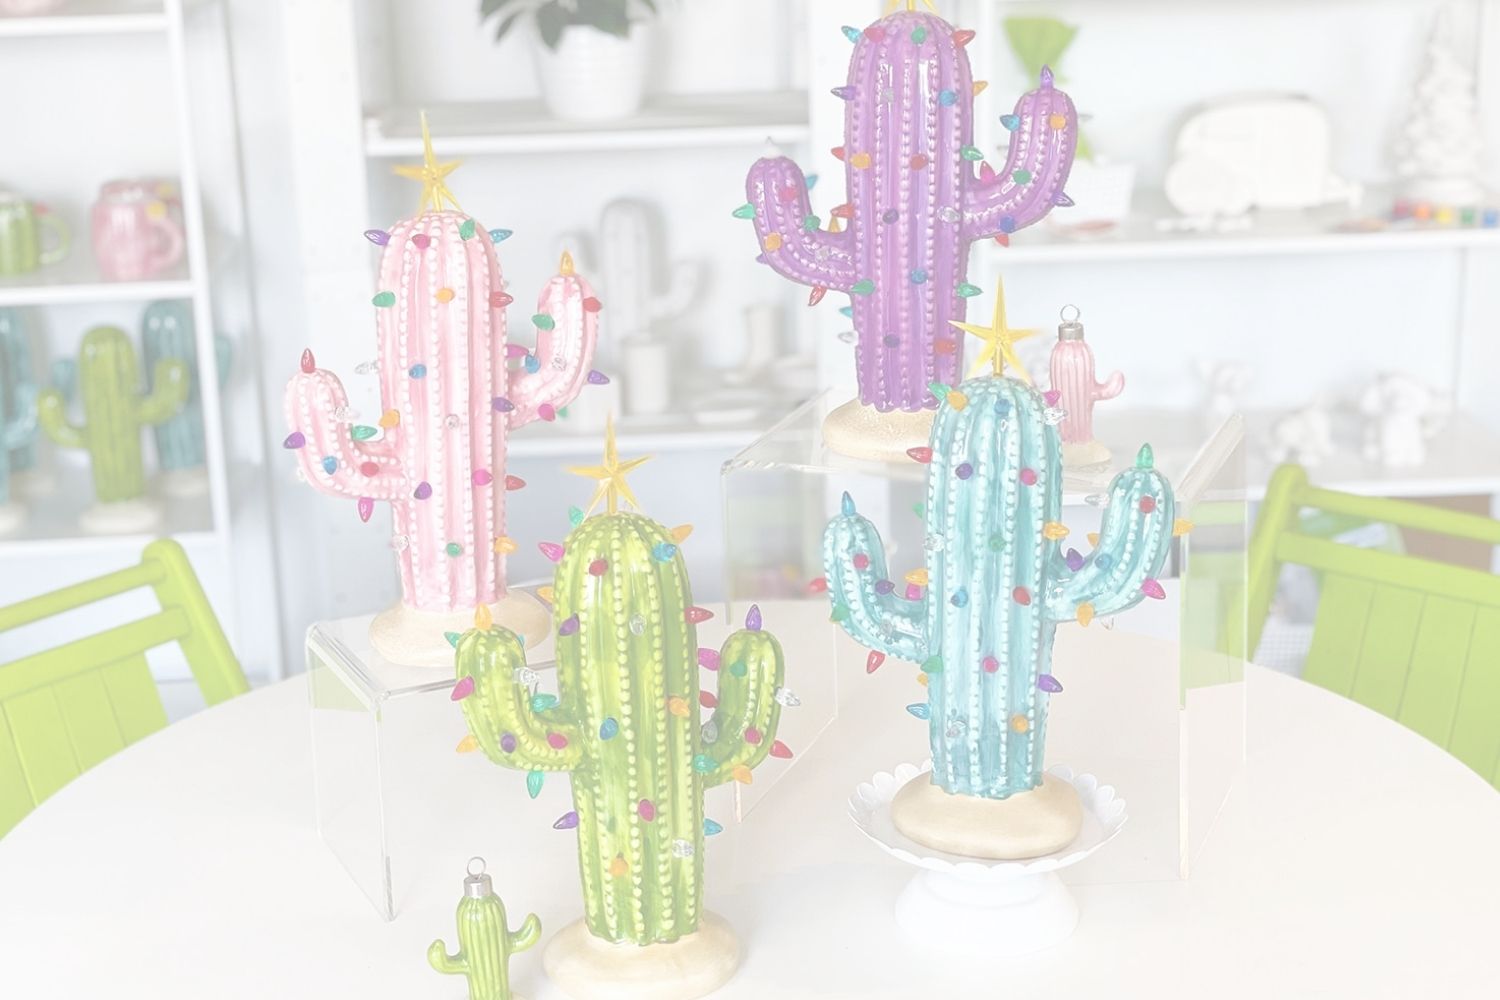 Home of the Original Ceramic Lighted Cactus Tree – Brush Strokes Pottery